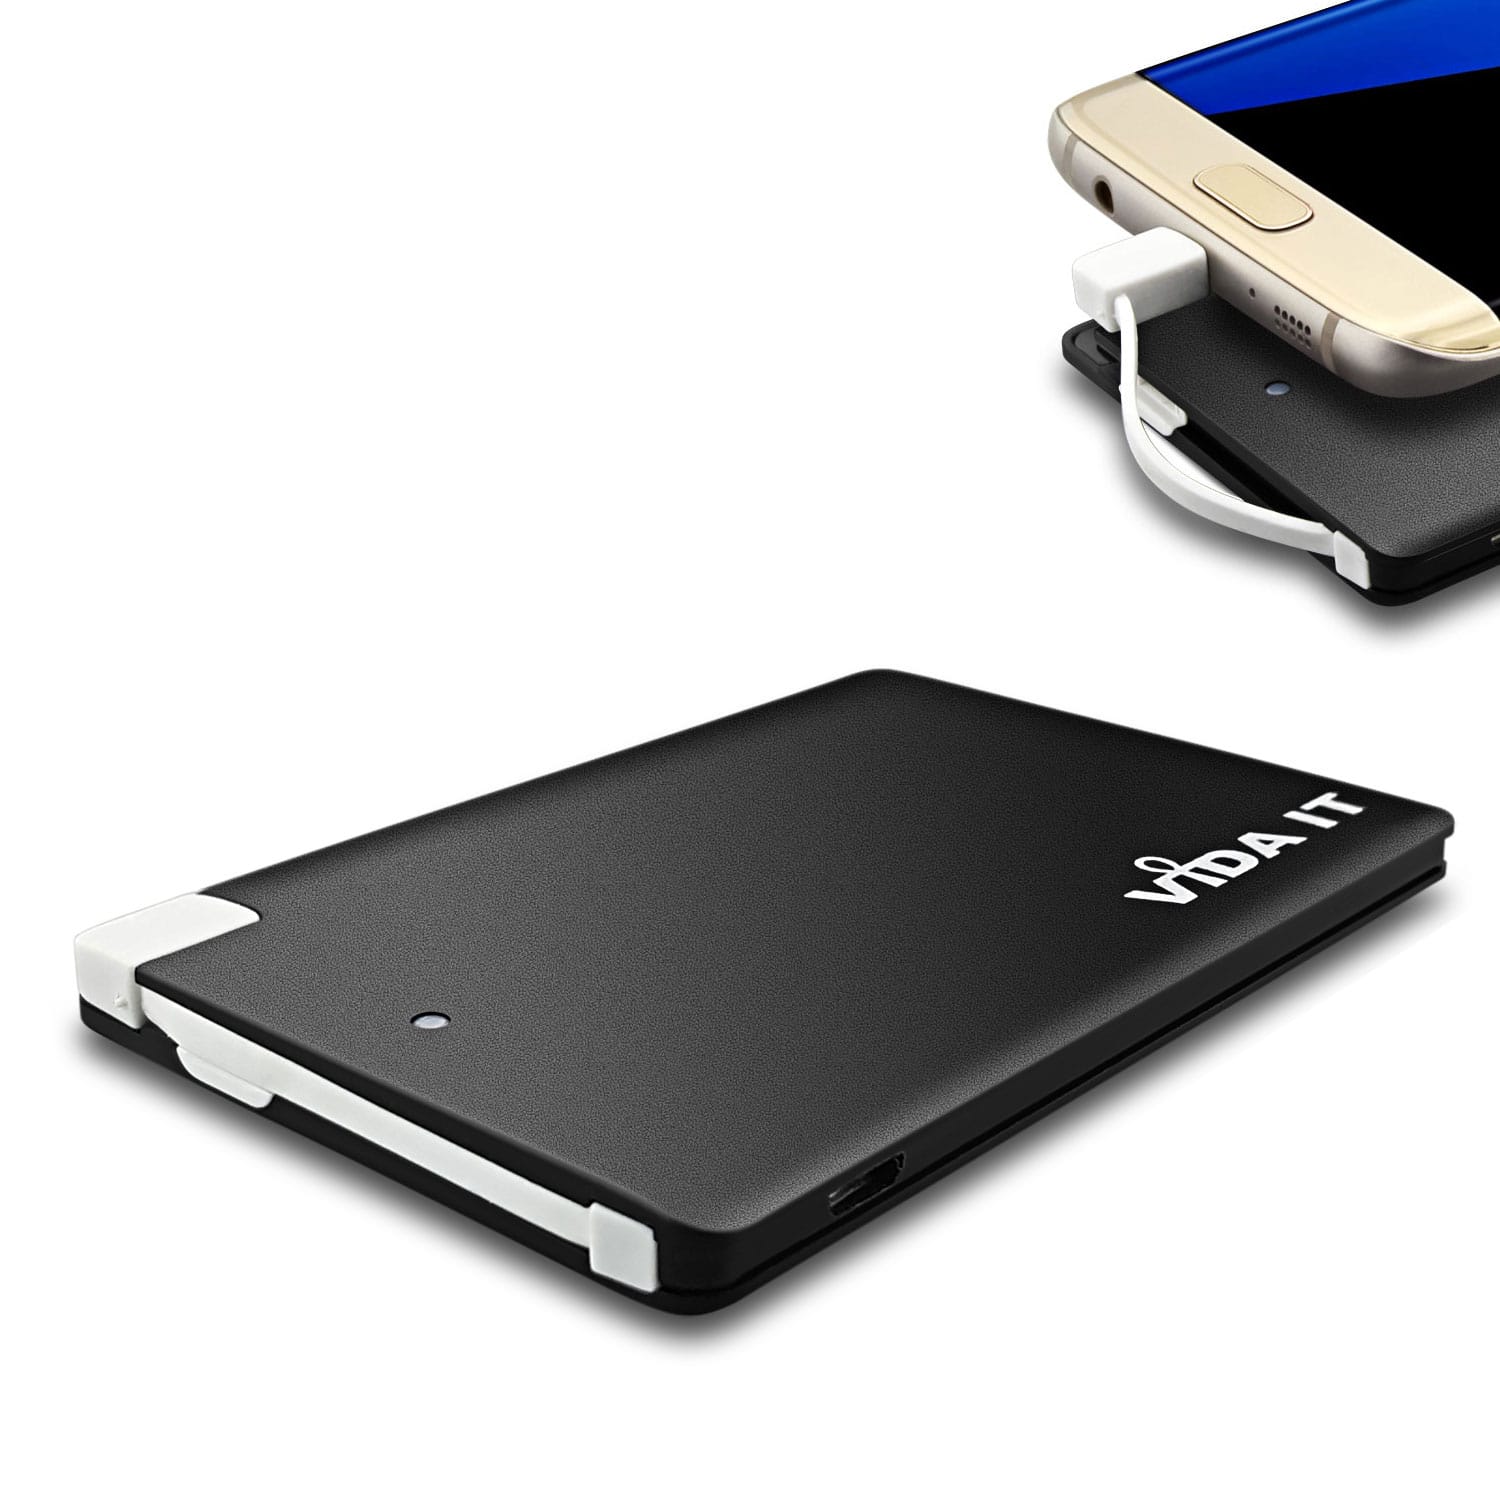 Vida IT VP5 USB 5 Ports Desktop Charging Hub 40W Black (UK or EU Plug) -  Vida Electronics